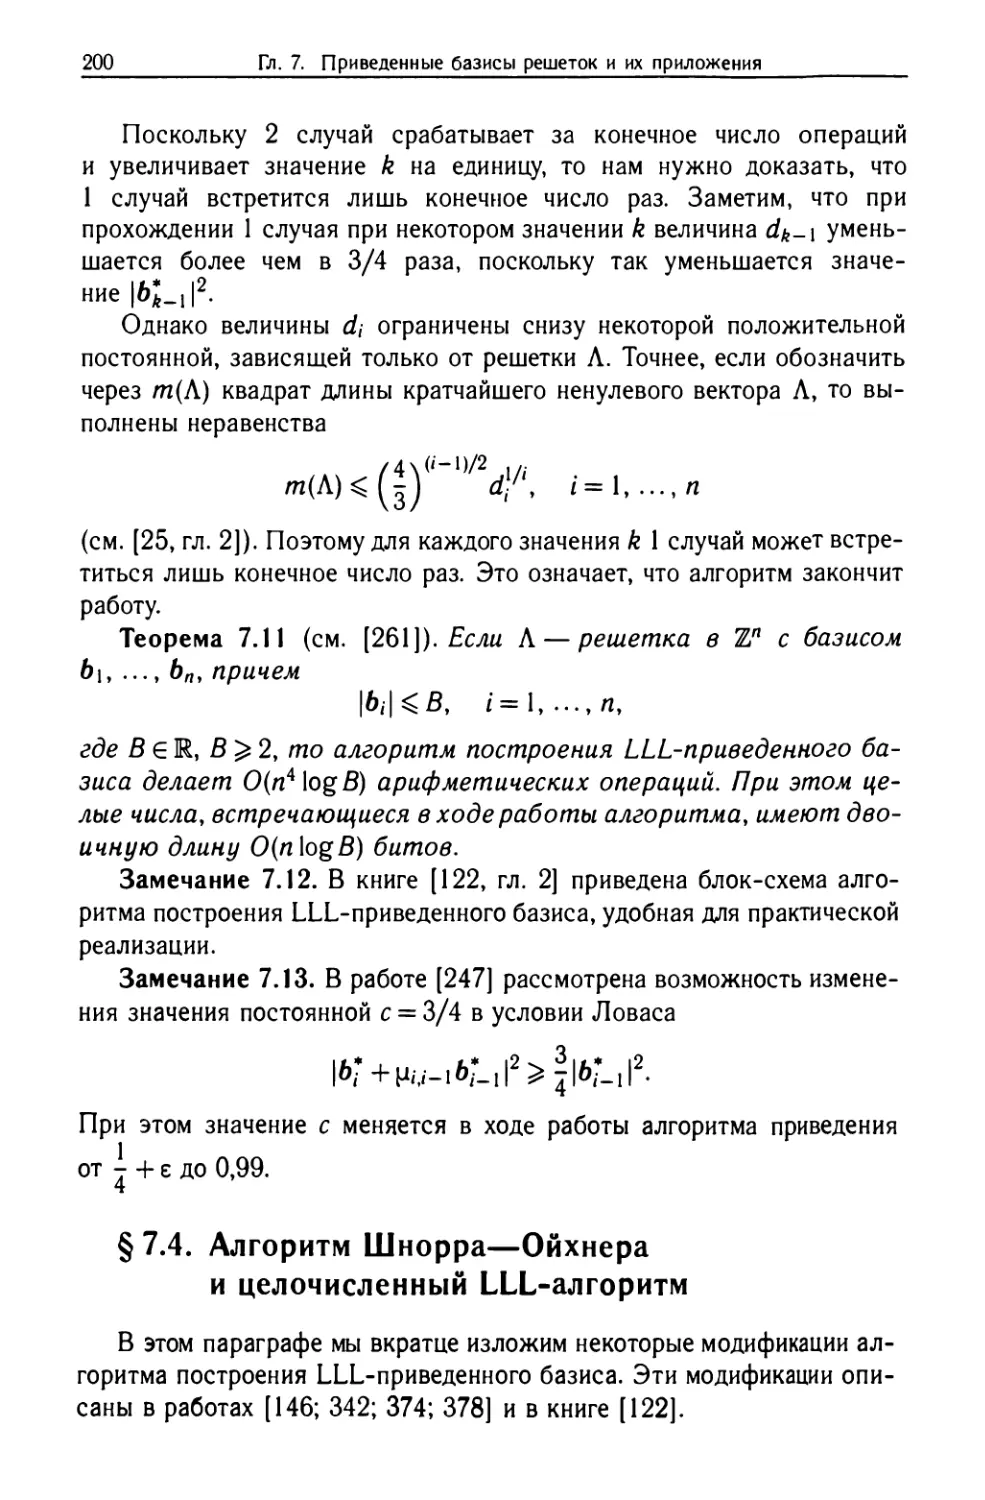 §7.4. Алгоритм Шнорра-Ойхнера и целочисленный LLL-алгоритм